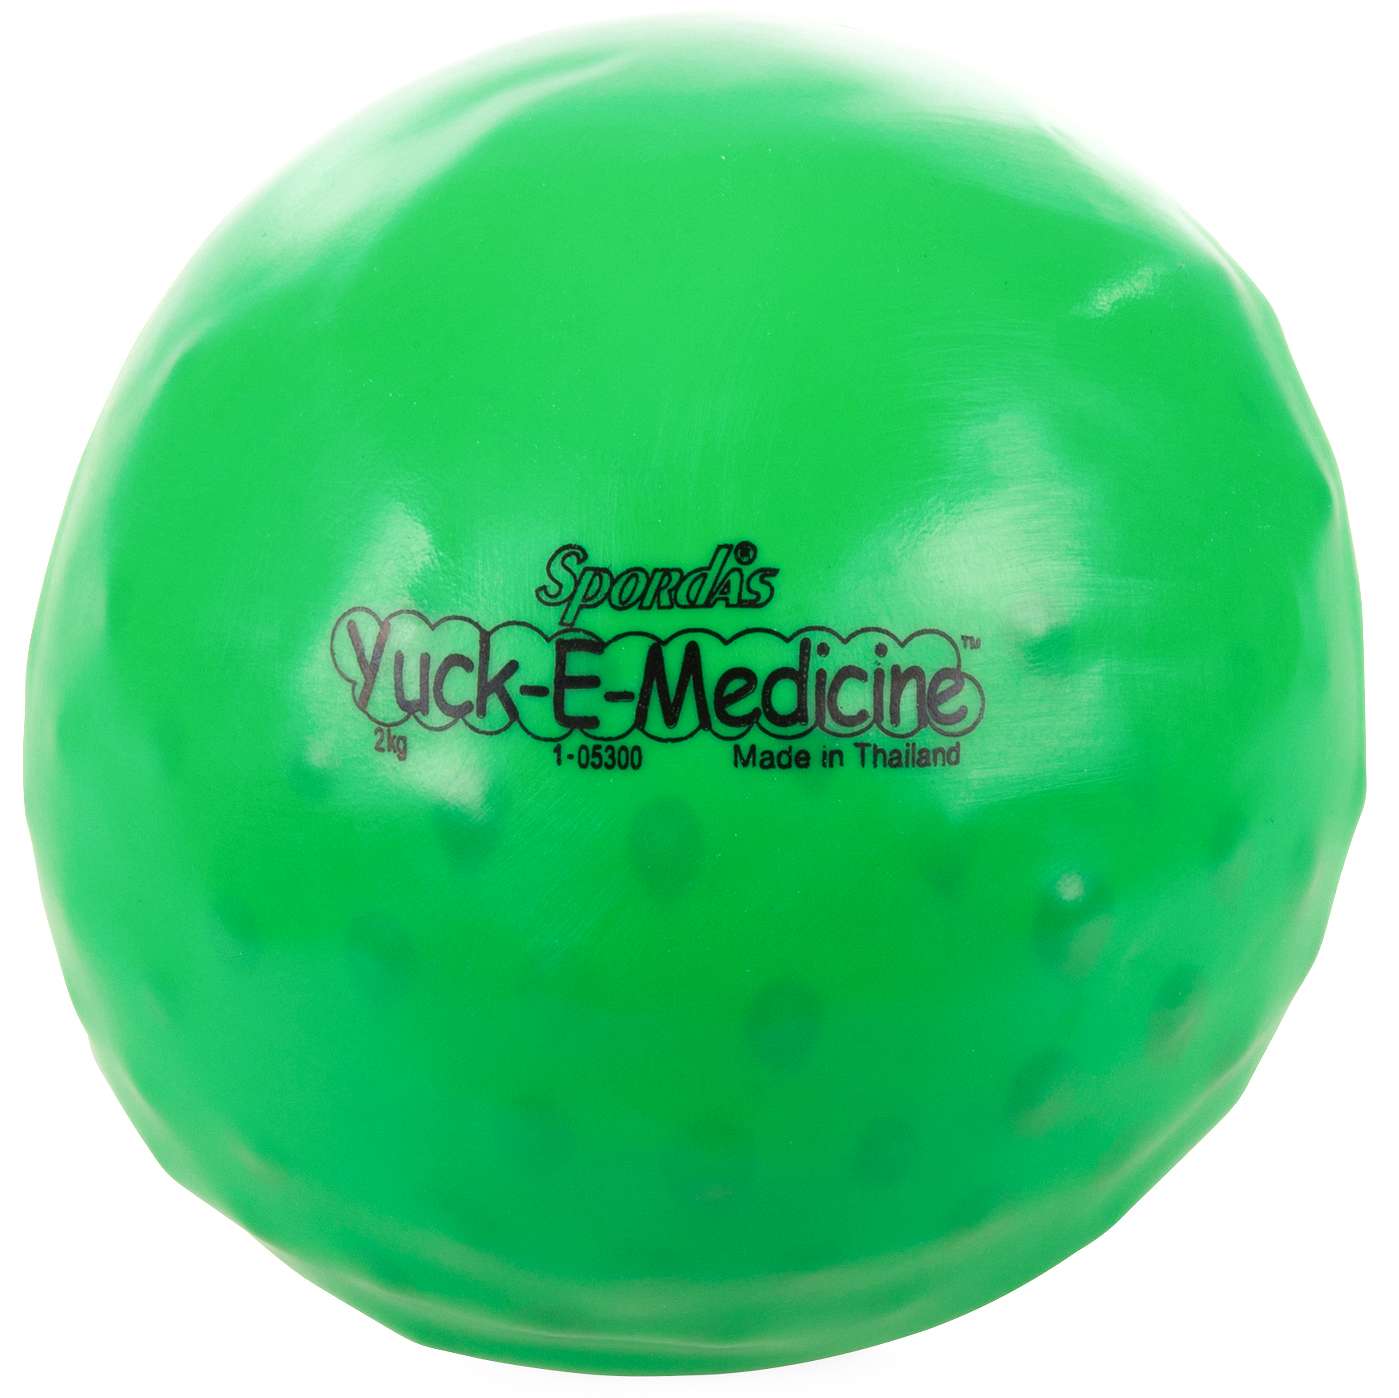 Spordas Medizinball "Yuck-E-Medicine", 2 kg, ø 16 cm, Grün von Spordas